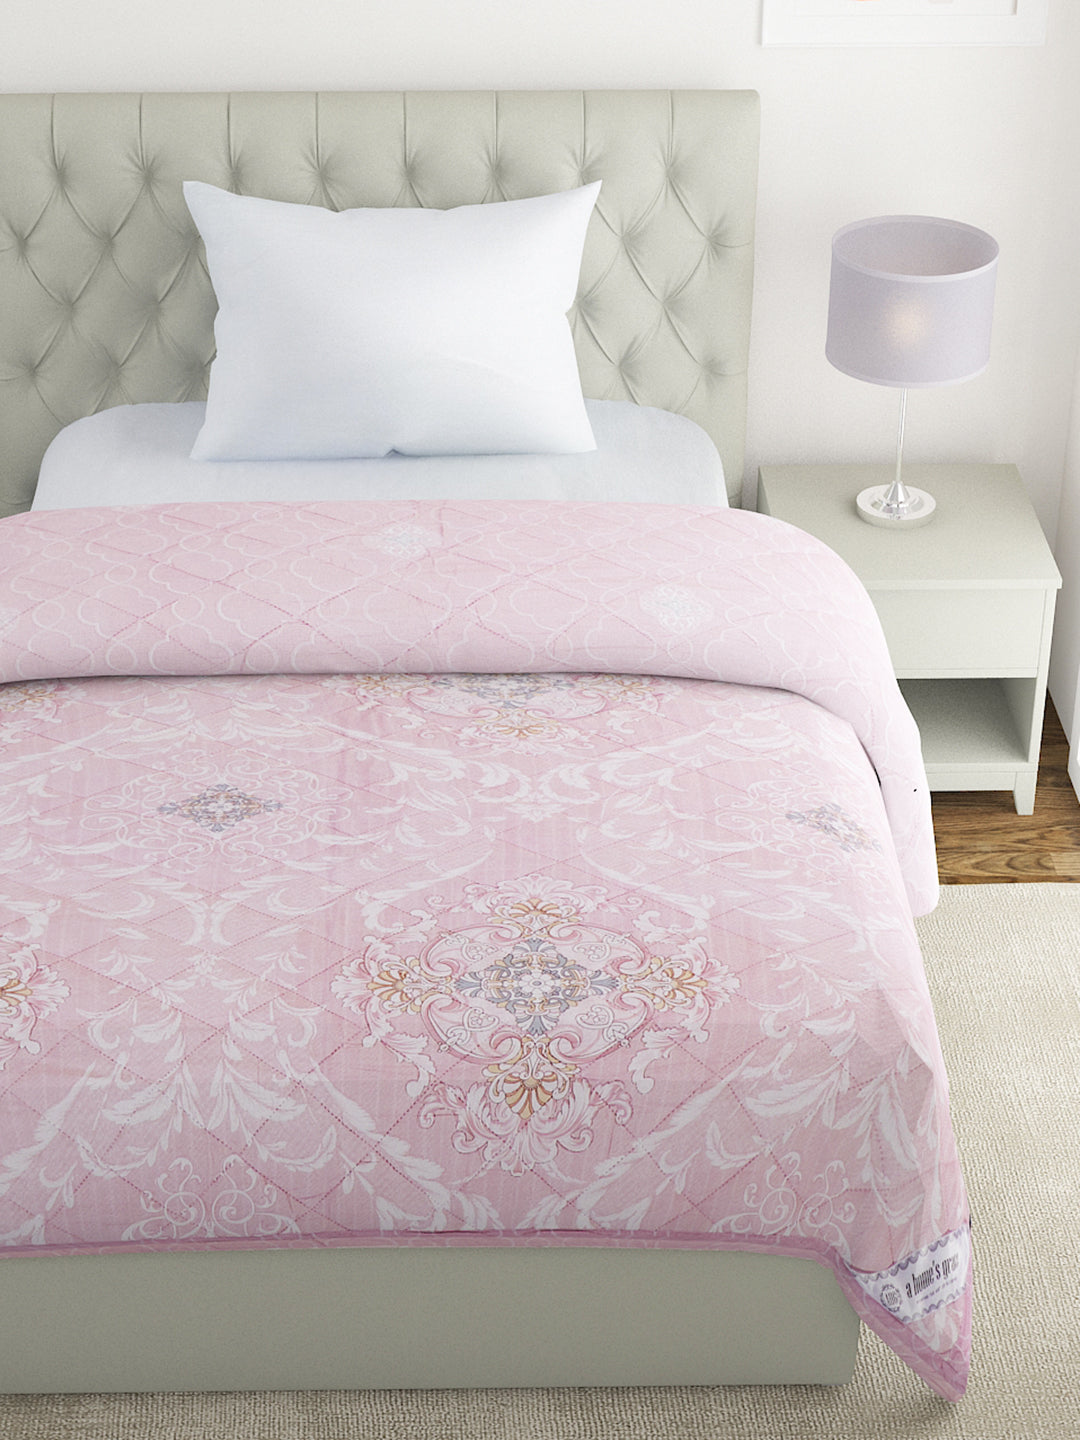 Floral Print Set of 2 Single Bed Light Weight Comforter- Soft Pink